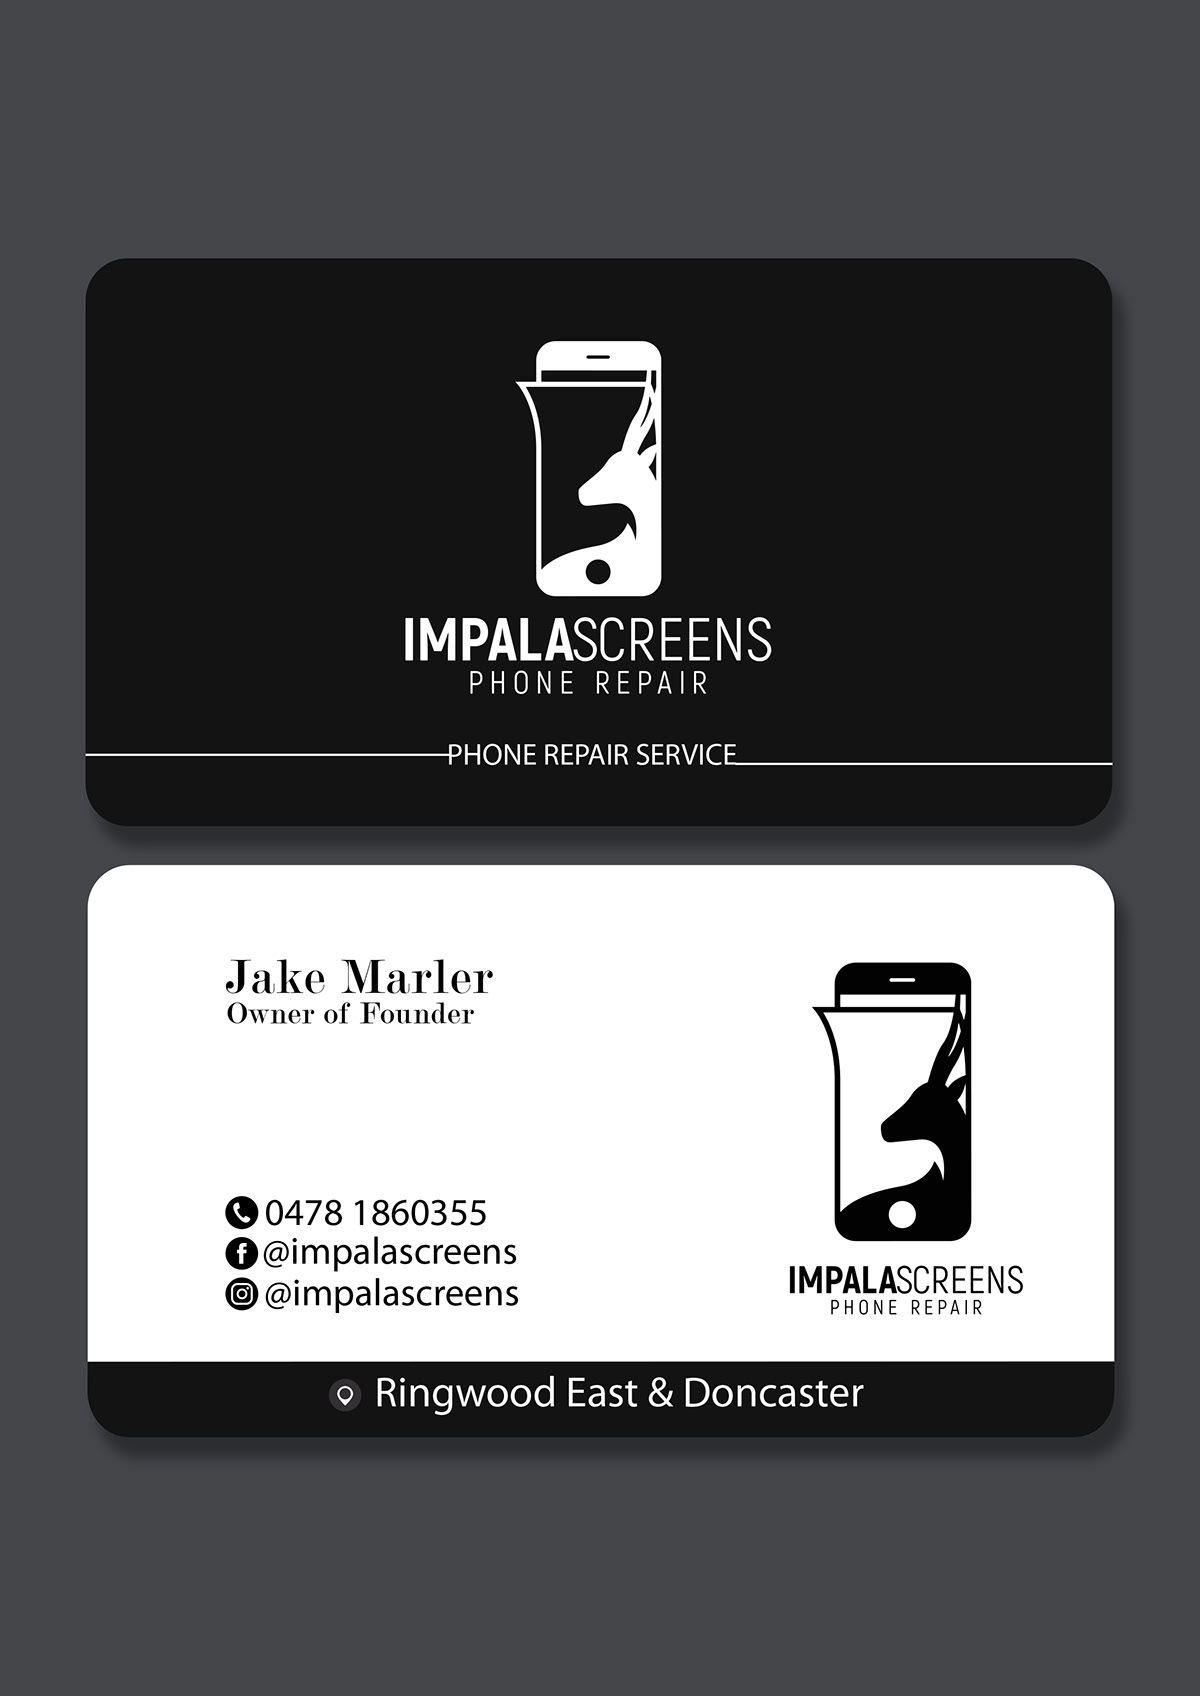 impalascreens-phone-repair-business-card-design-on-behance